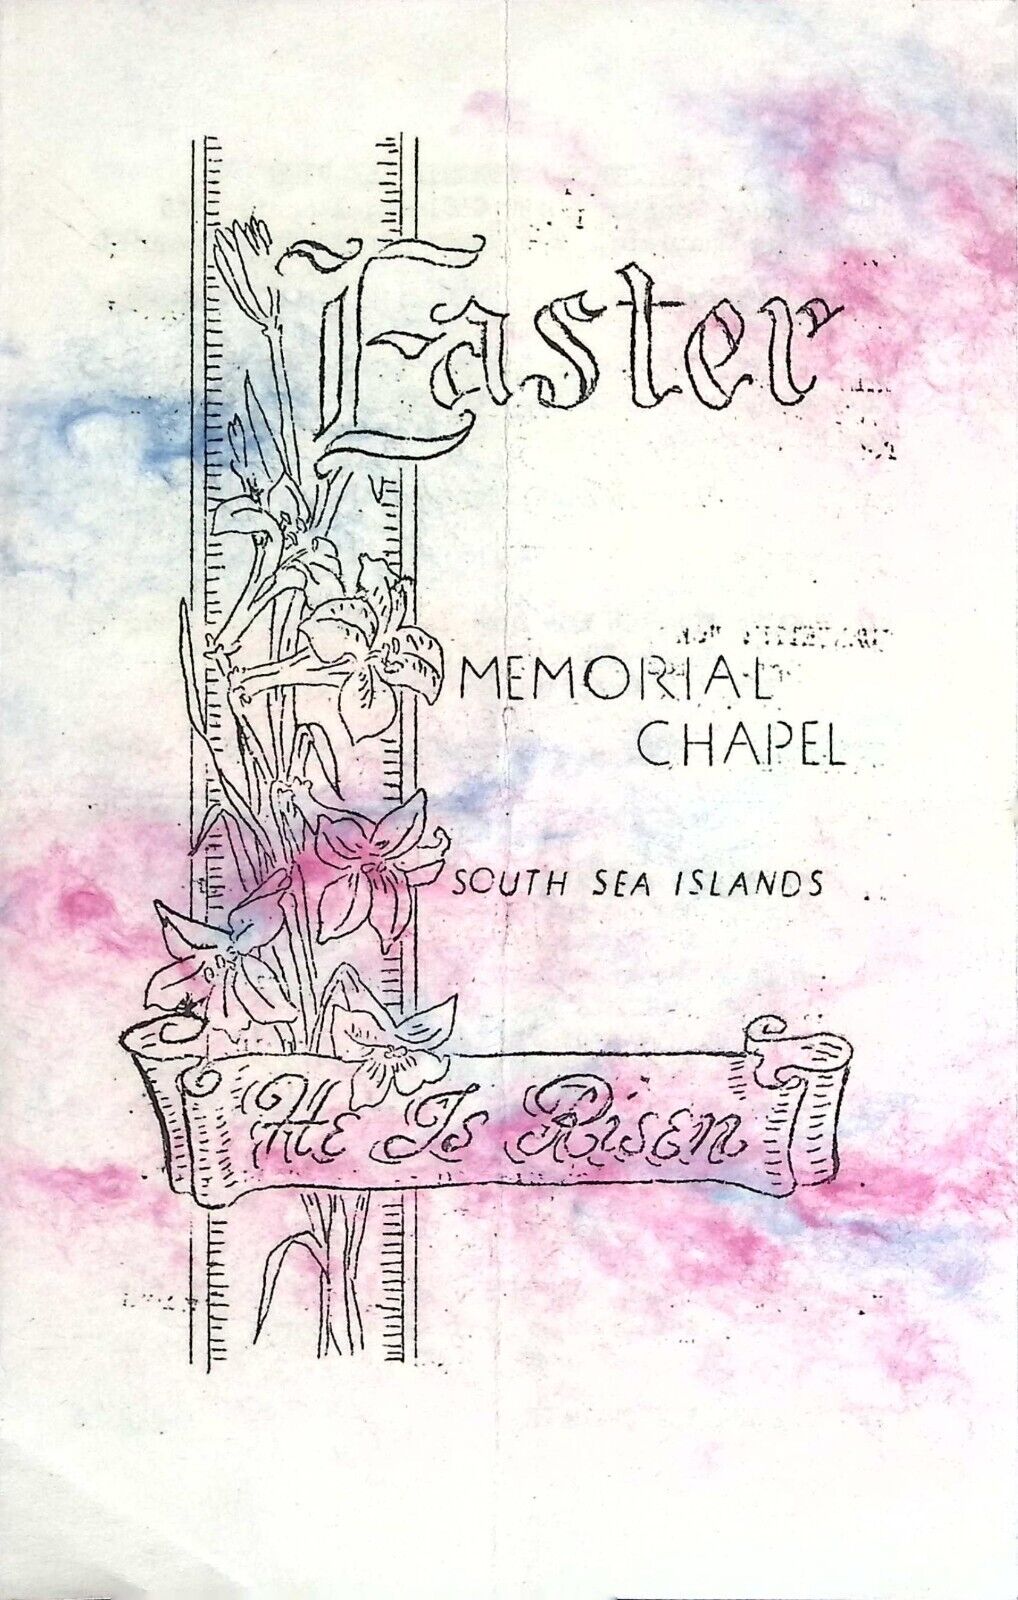 1945 Military Easter Religious Program South Sea Island Memorial Chapel